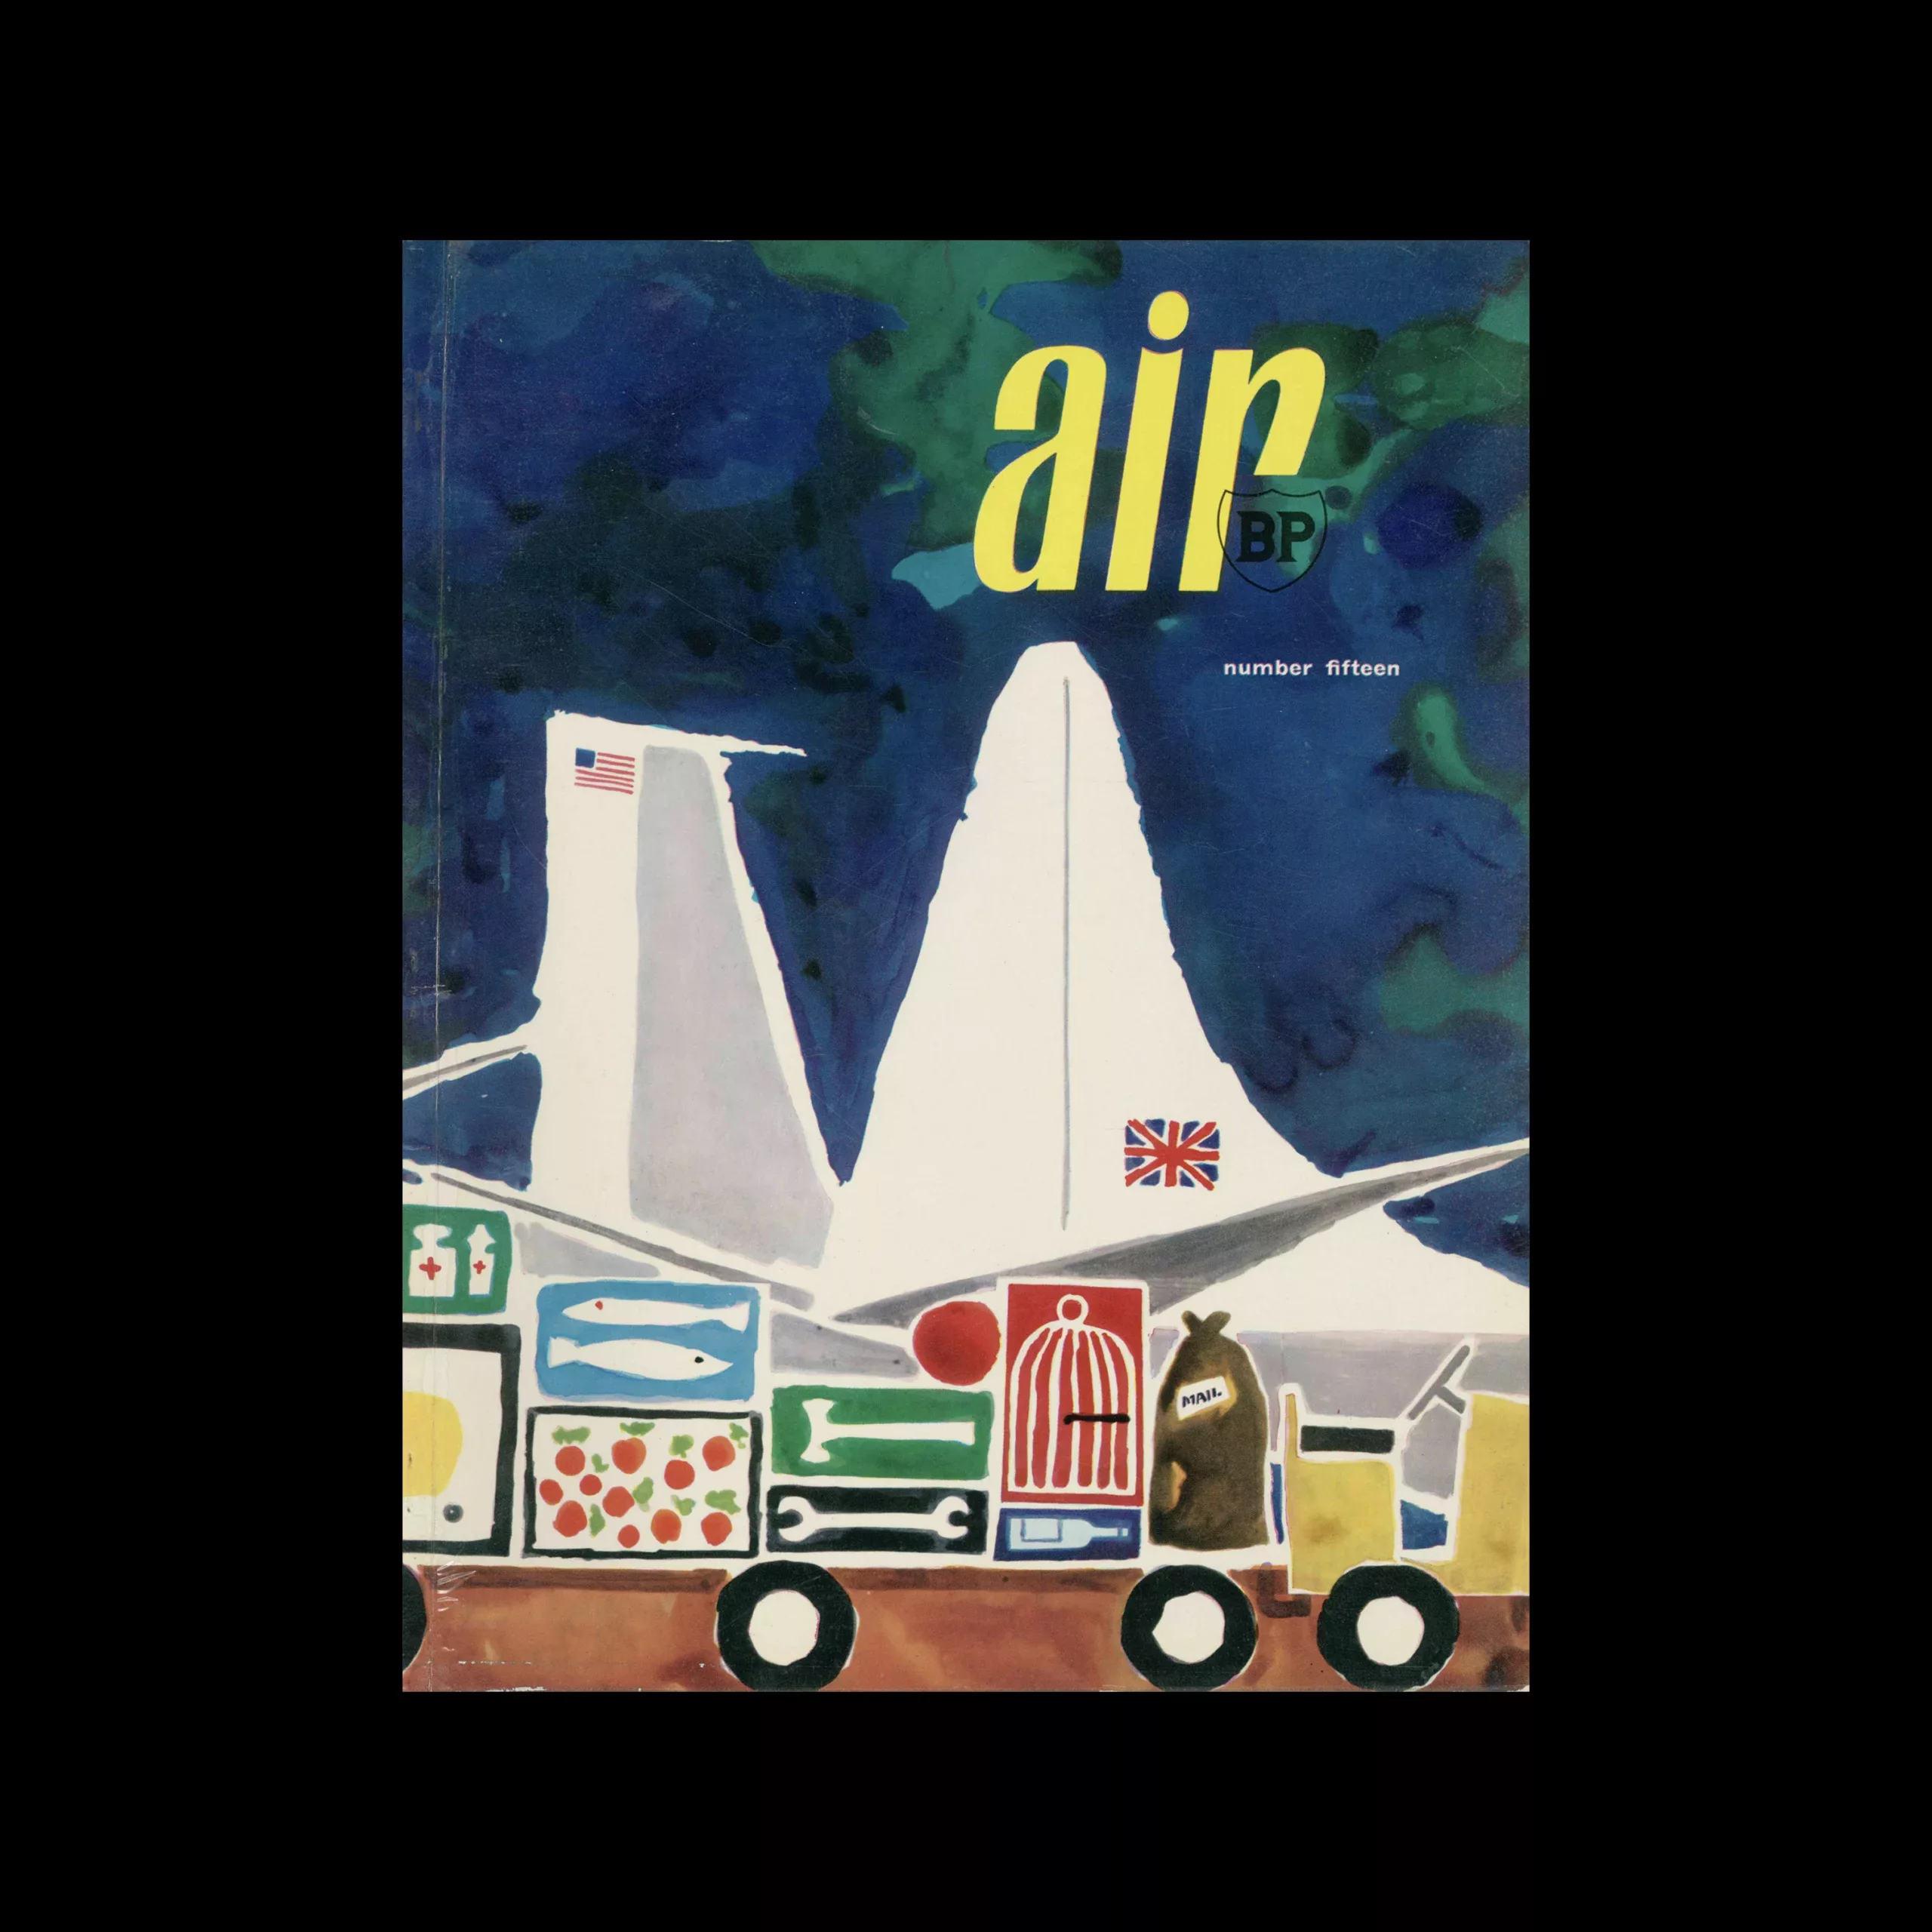 Air BP, 15, 1960s. Designed by Design Partnership Ltd